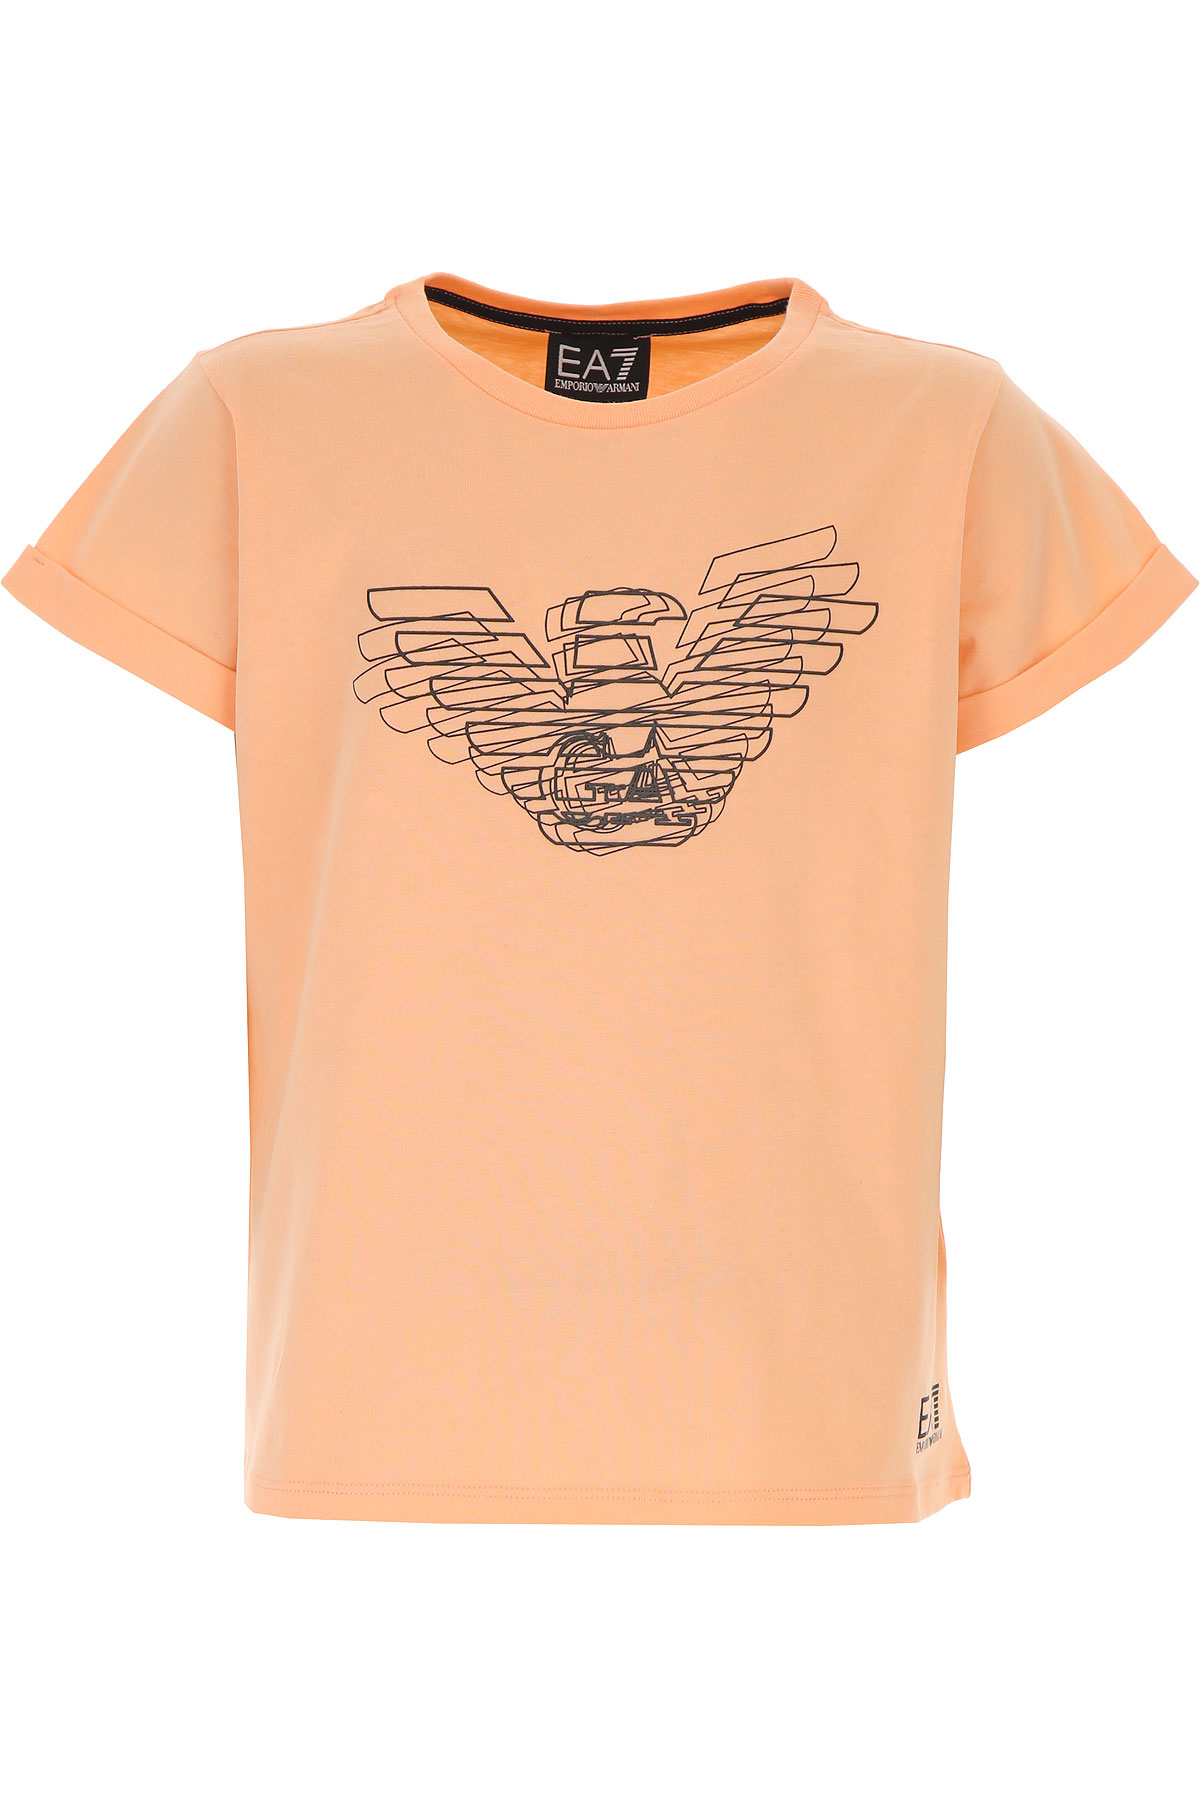 Emporio Armani Kinder T-Shirt für Mädchen Günstig im Outlet Sale, Pfirsich, Baumwolle, 2017, 10Y 12Y 14Y 4Y 6Y 8Y